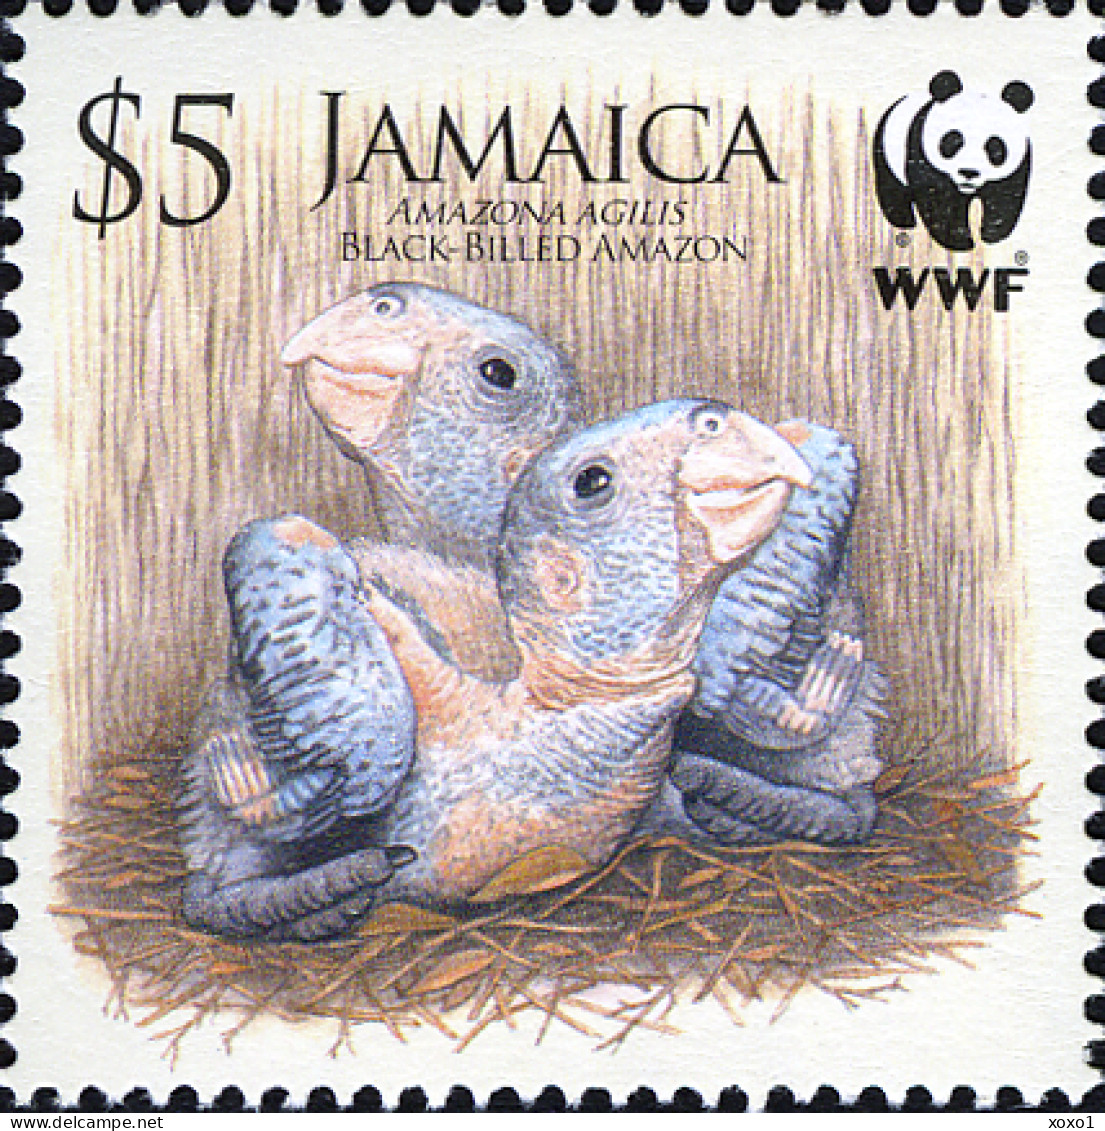 Jamaica 2006 MiNr. 1122 - 1125 Jamaika WWF Birds, Parrots, Black-billed Amazon M/sh MNH** 12.80 € - Pappagalli & Tropicali